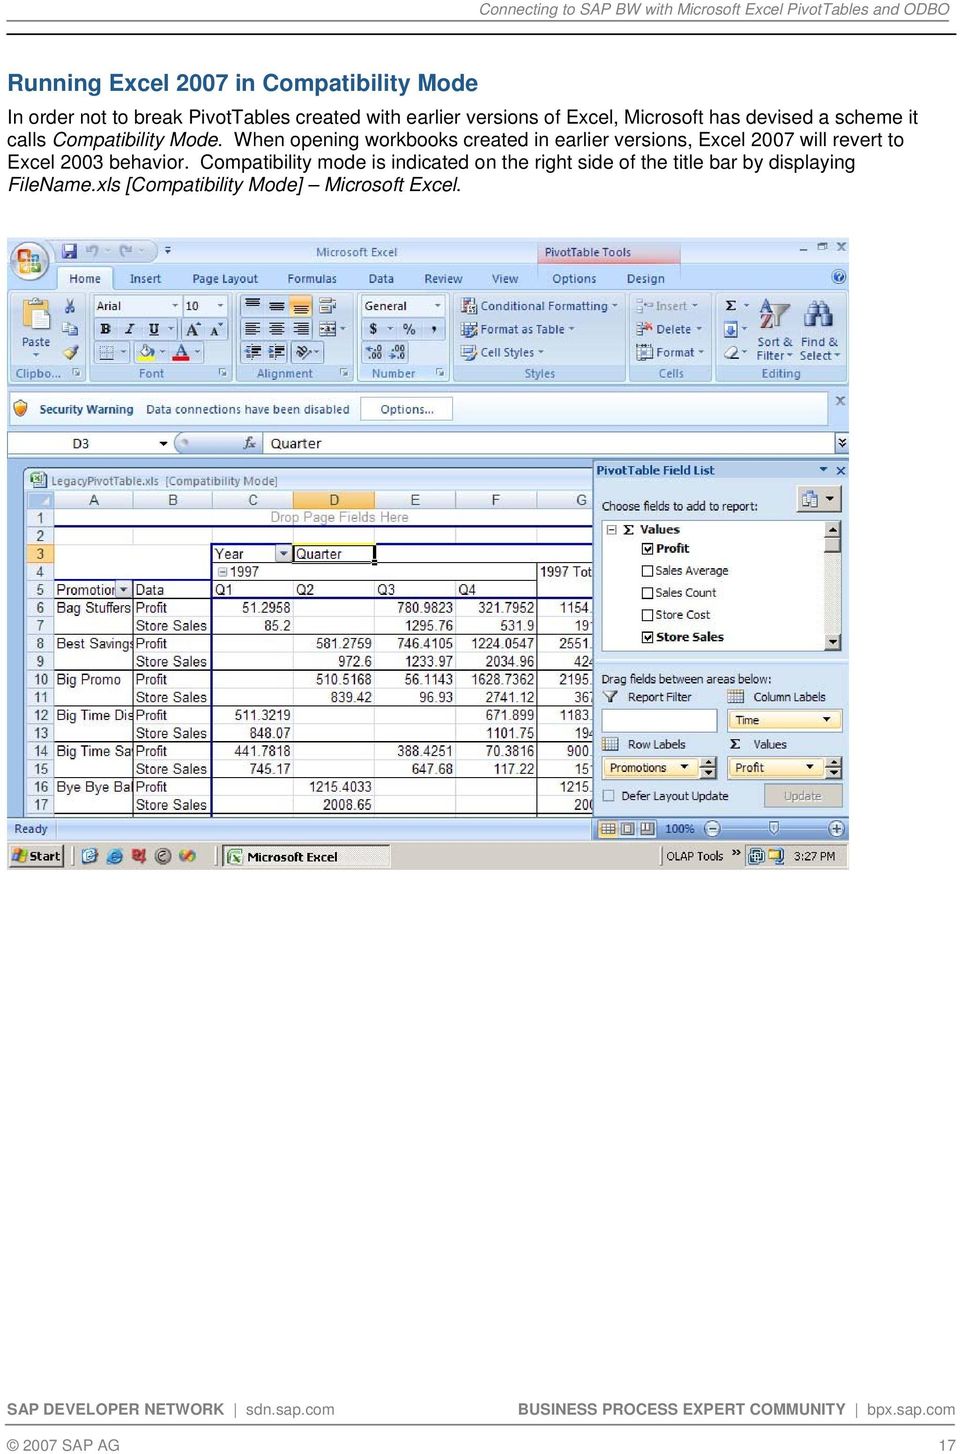 When opening workbooks created in earlier versions, Excel 2007 will revert to Excel 2003 behavior.